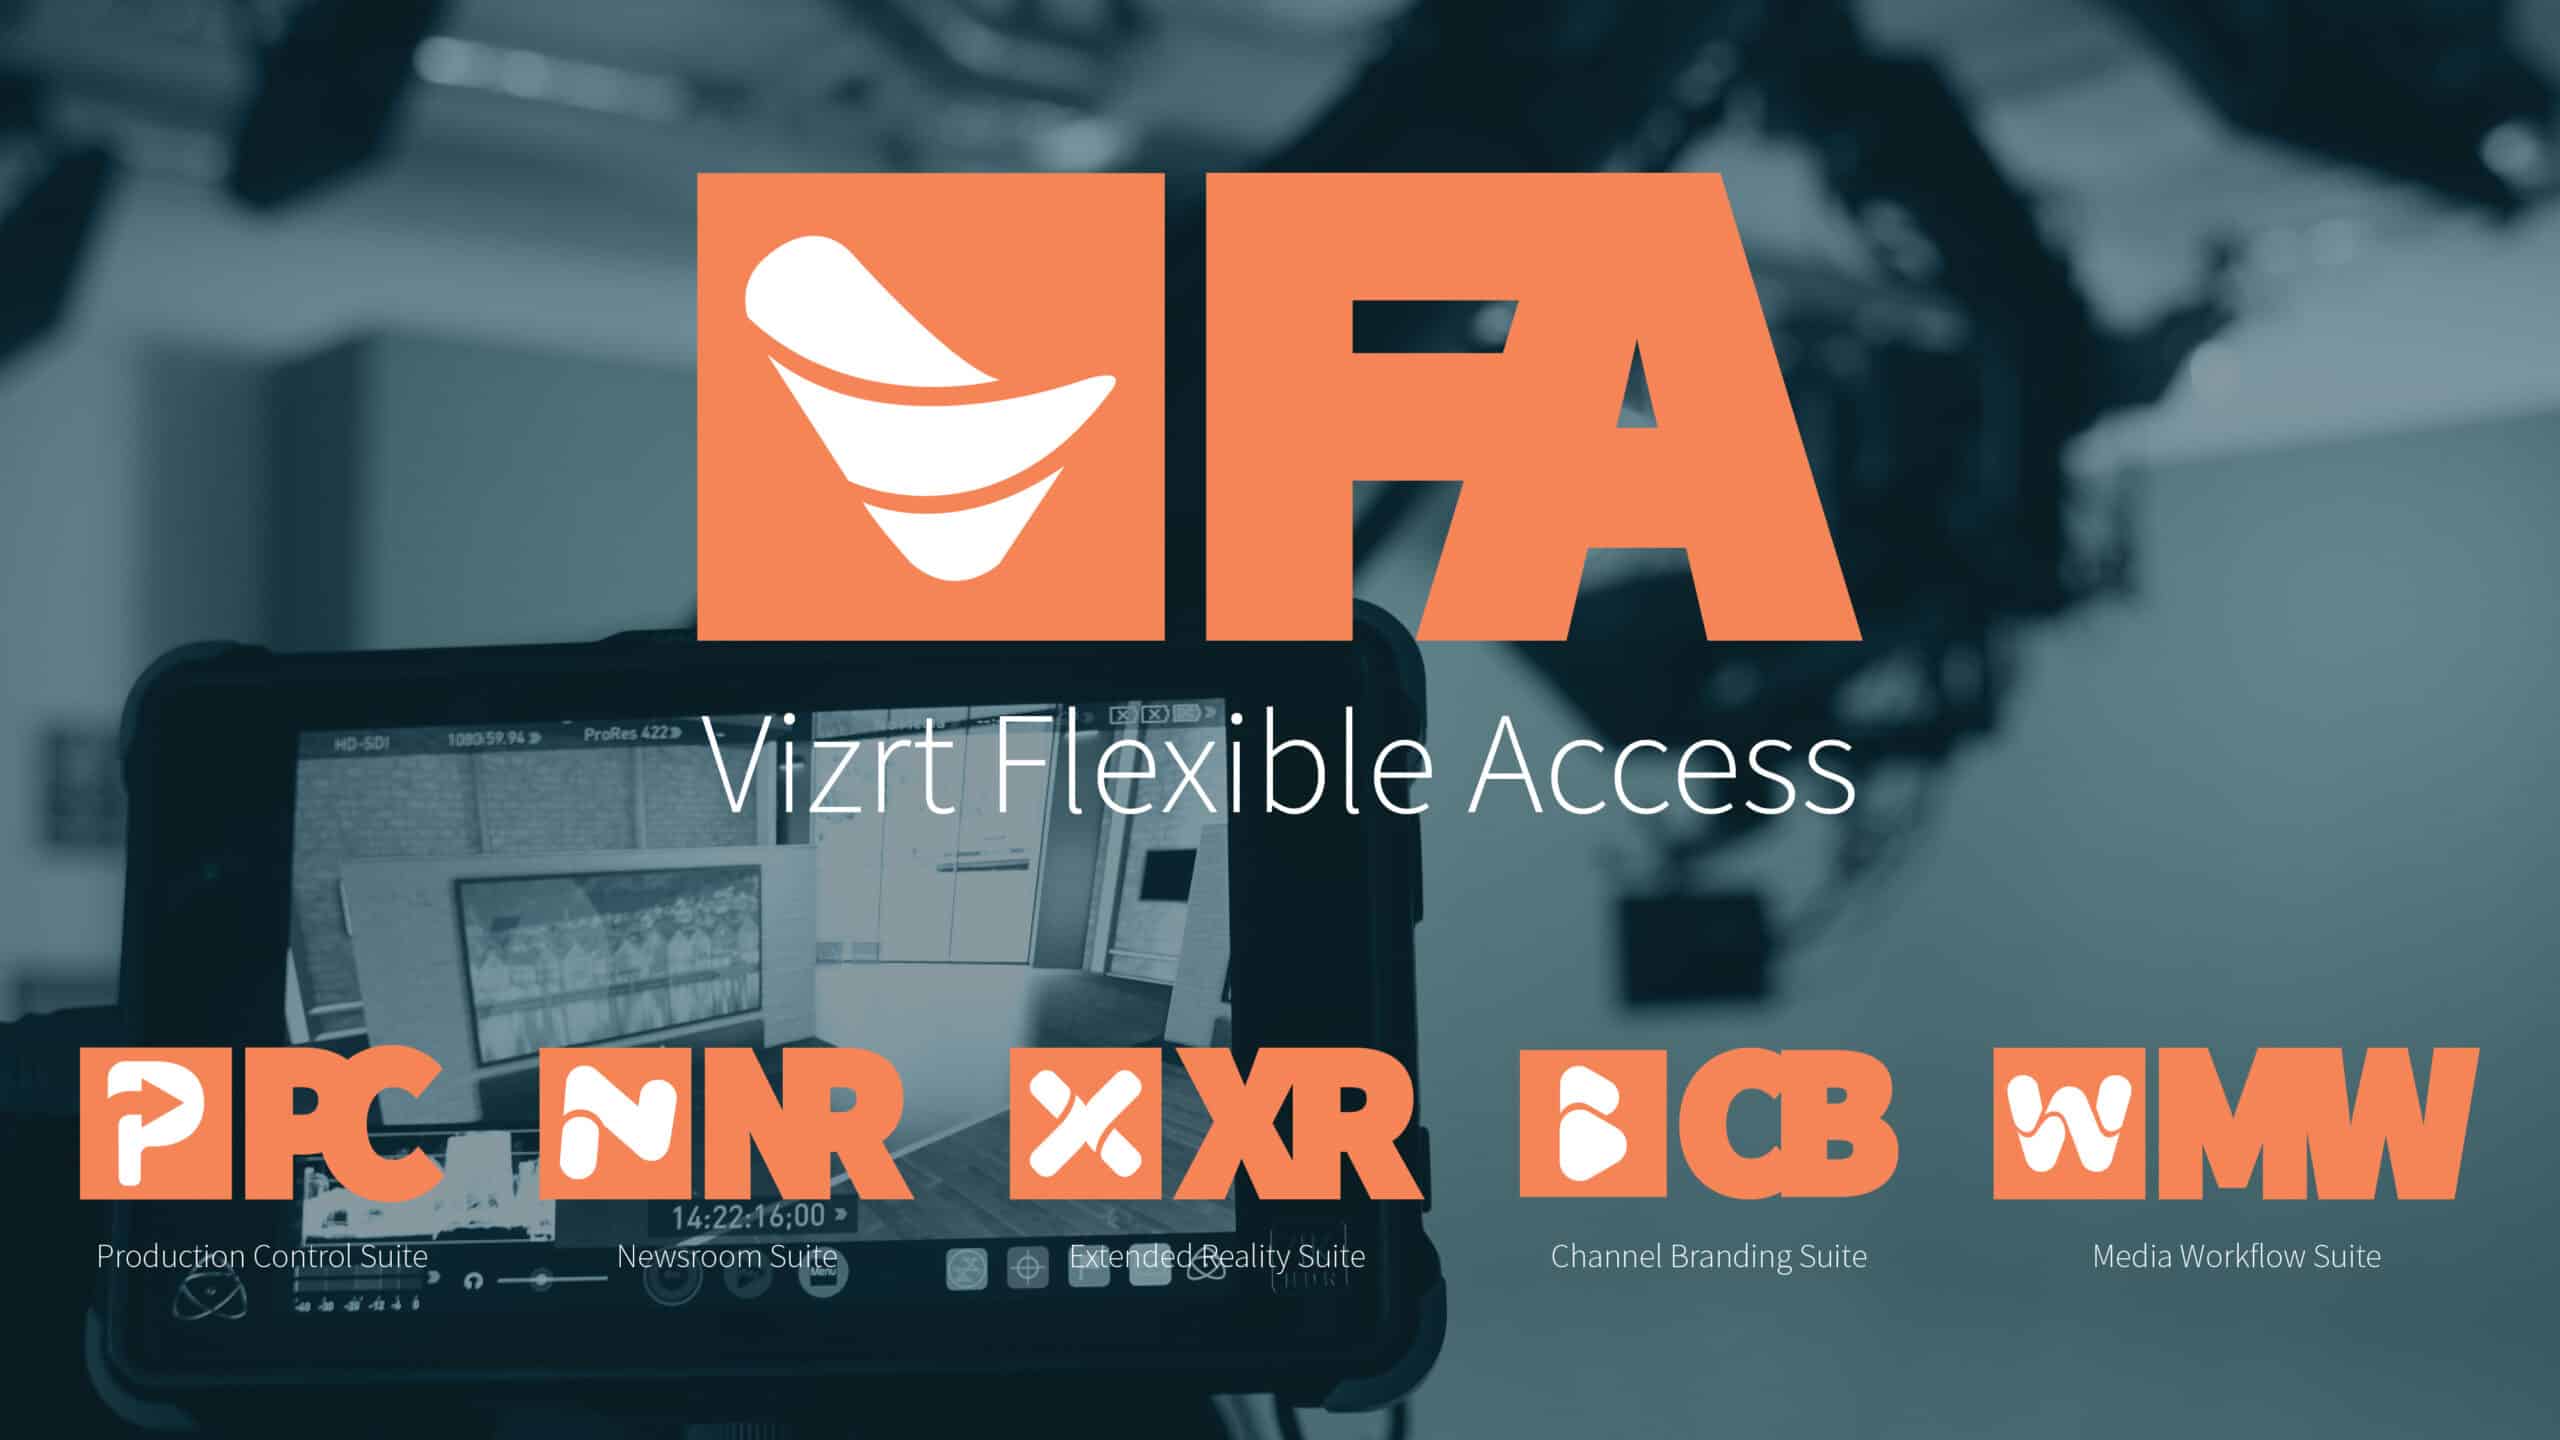 Vizrt Flexible Access PR Header